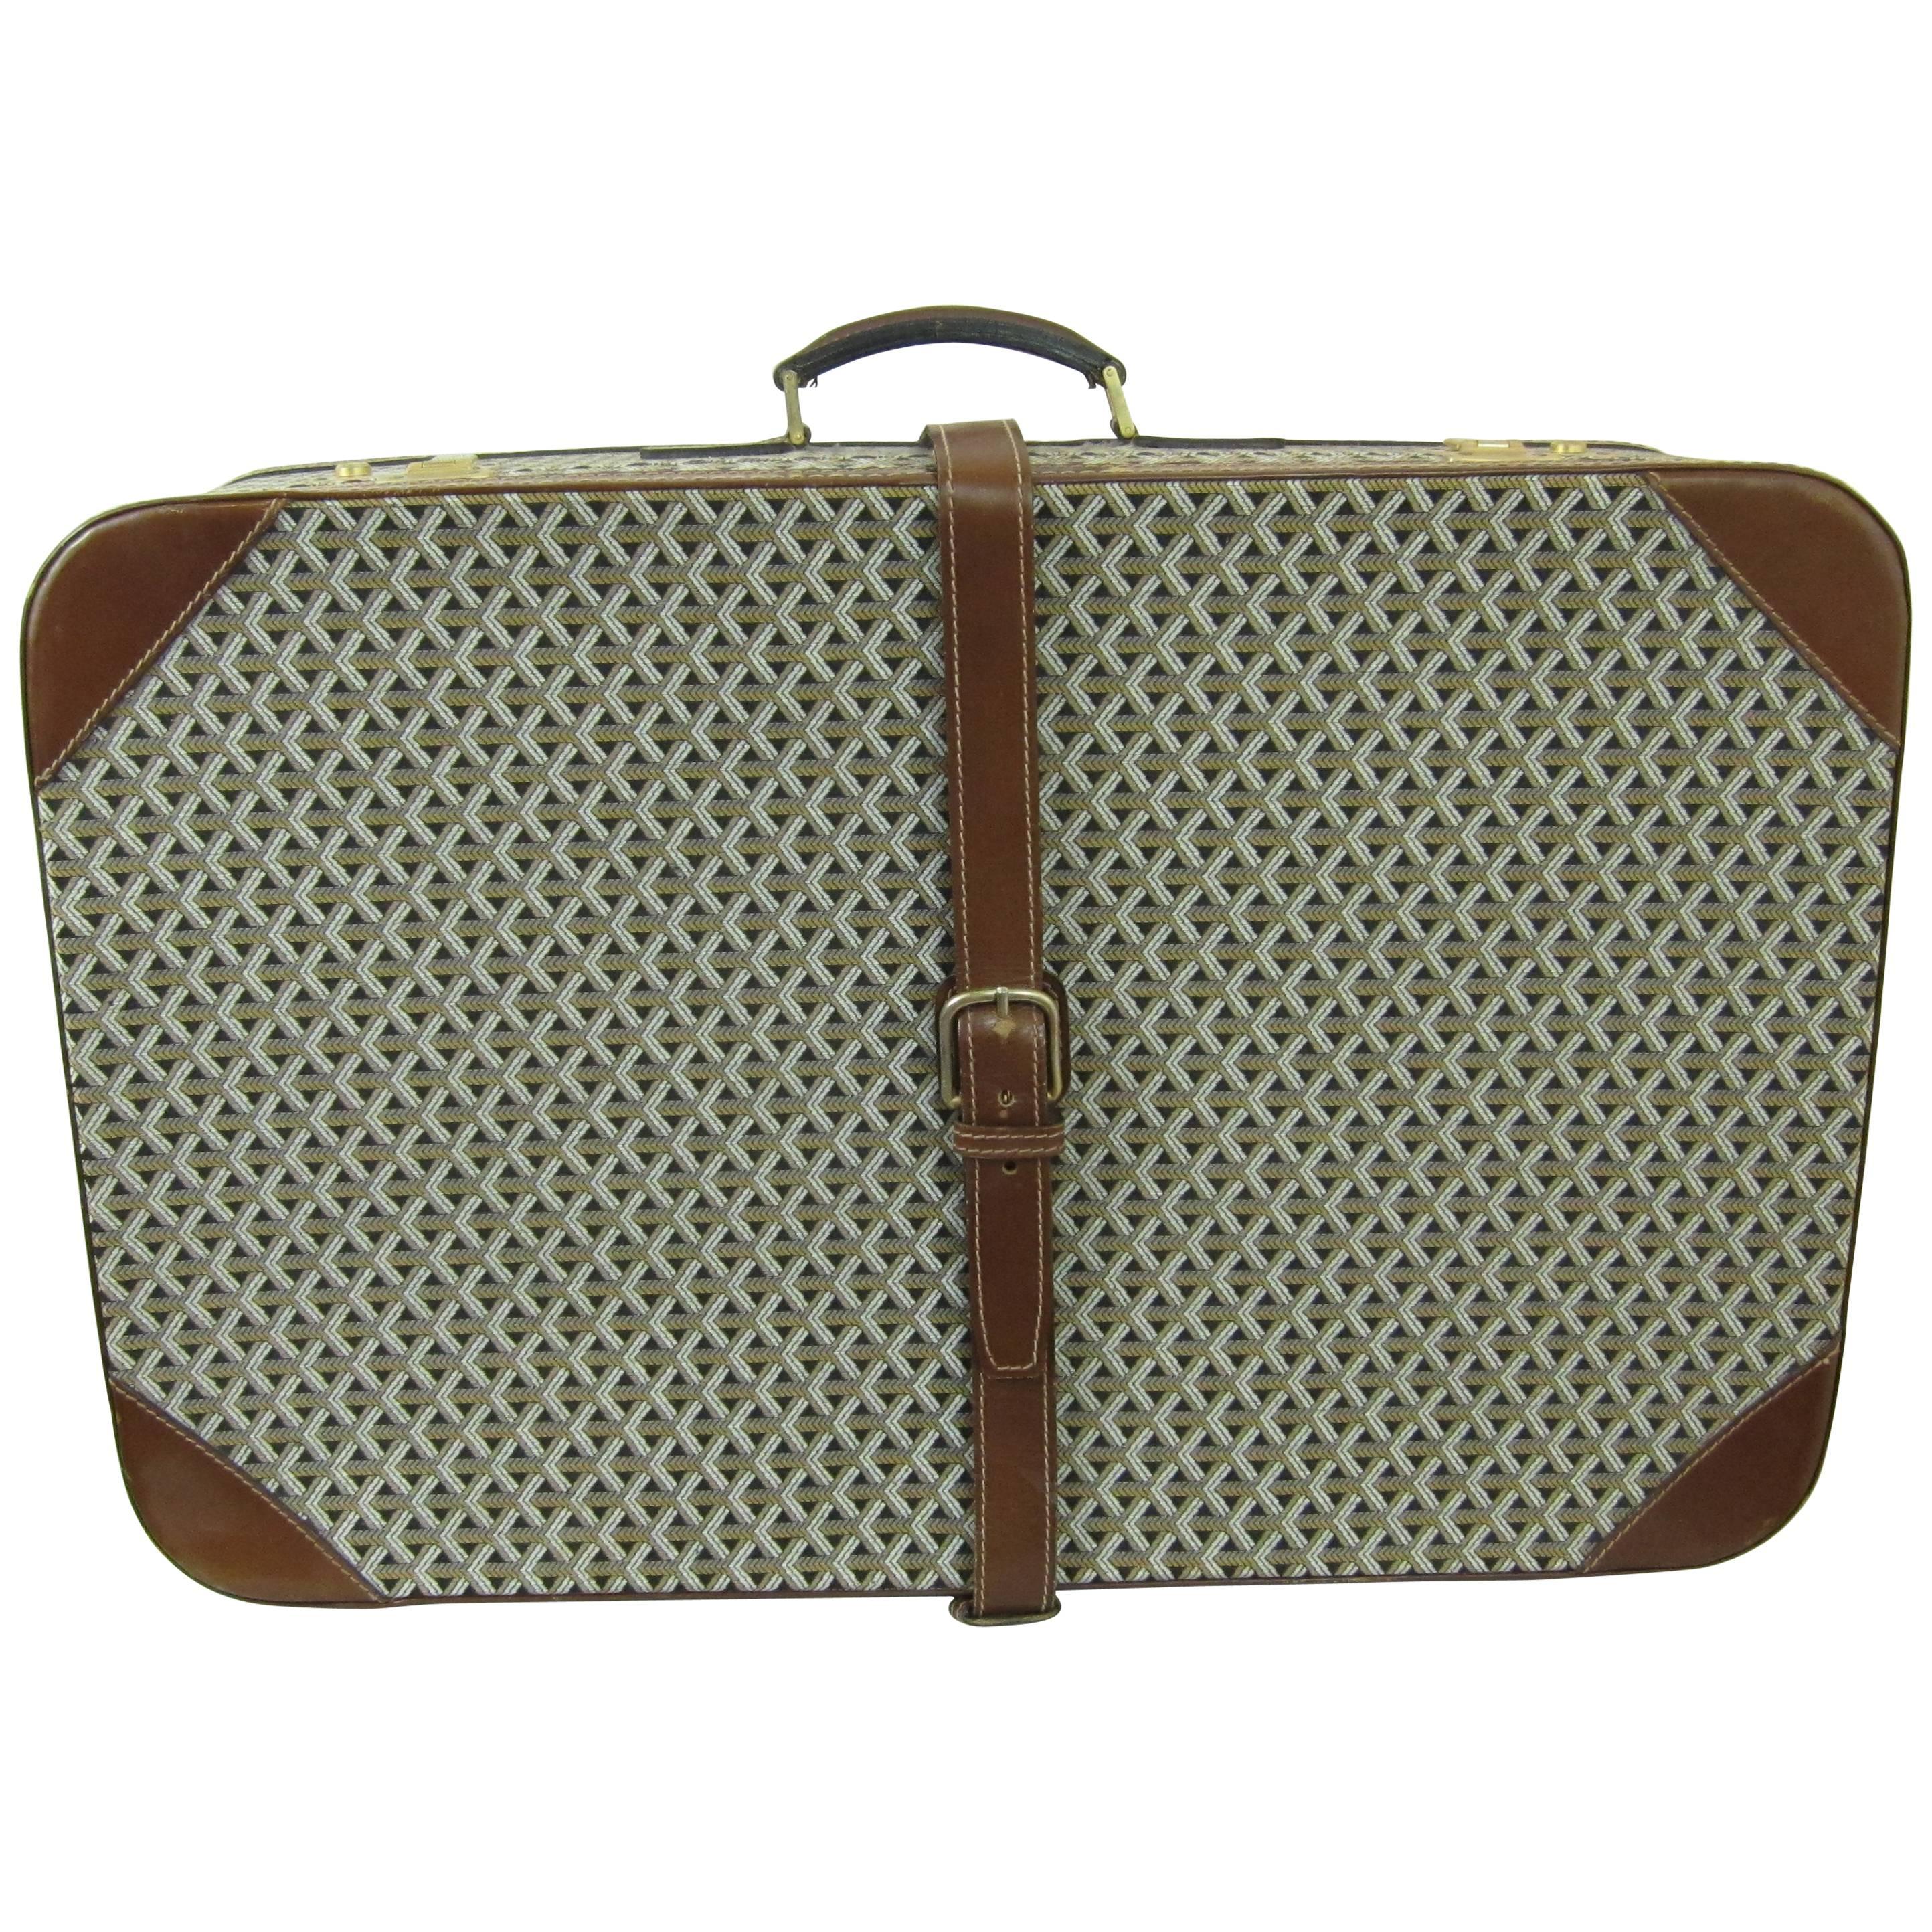 Goyard Vintage Suitcase in Canvas form the 60's